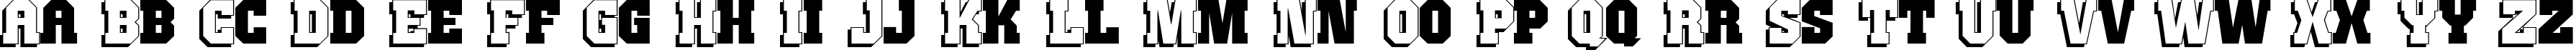 Пример написания английского алфавита шрифтом JimThorpe High